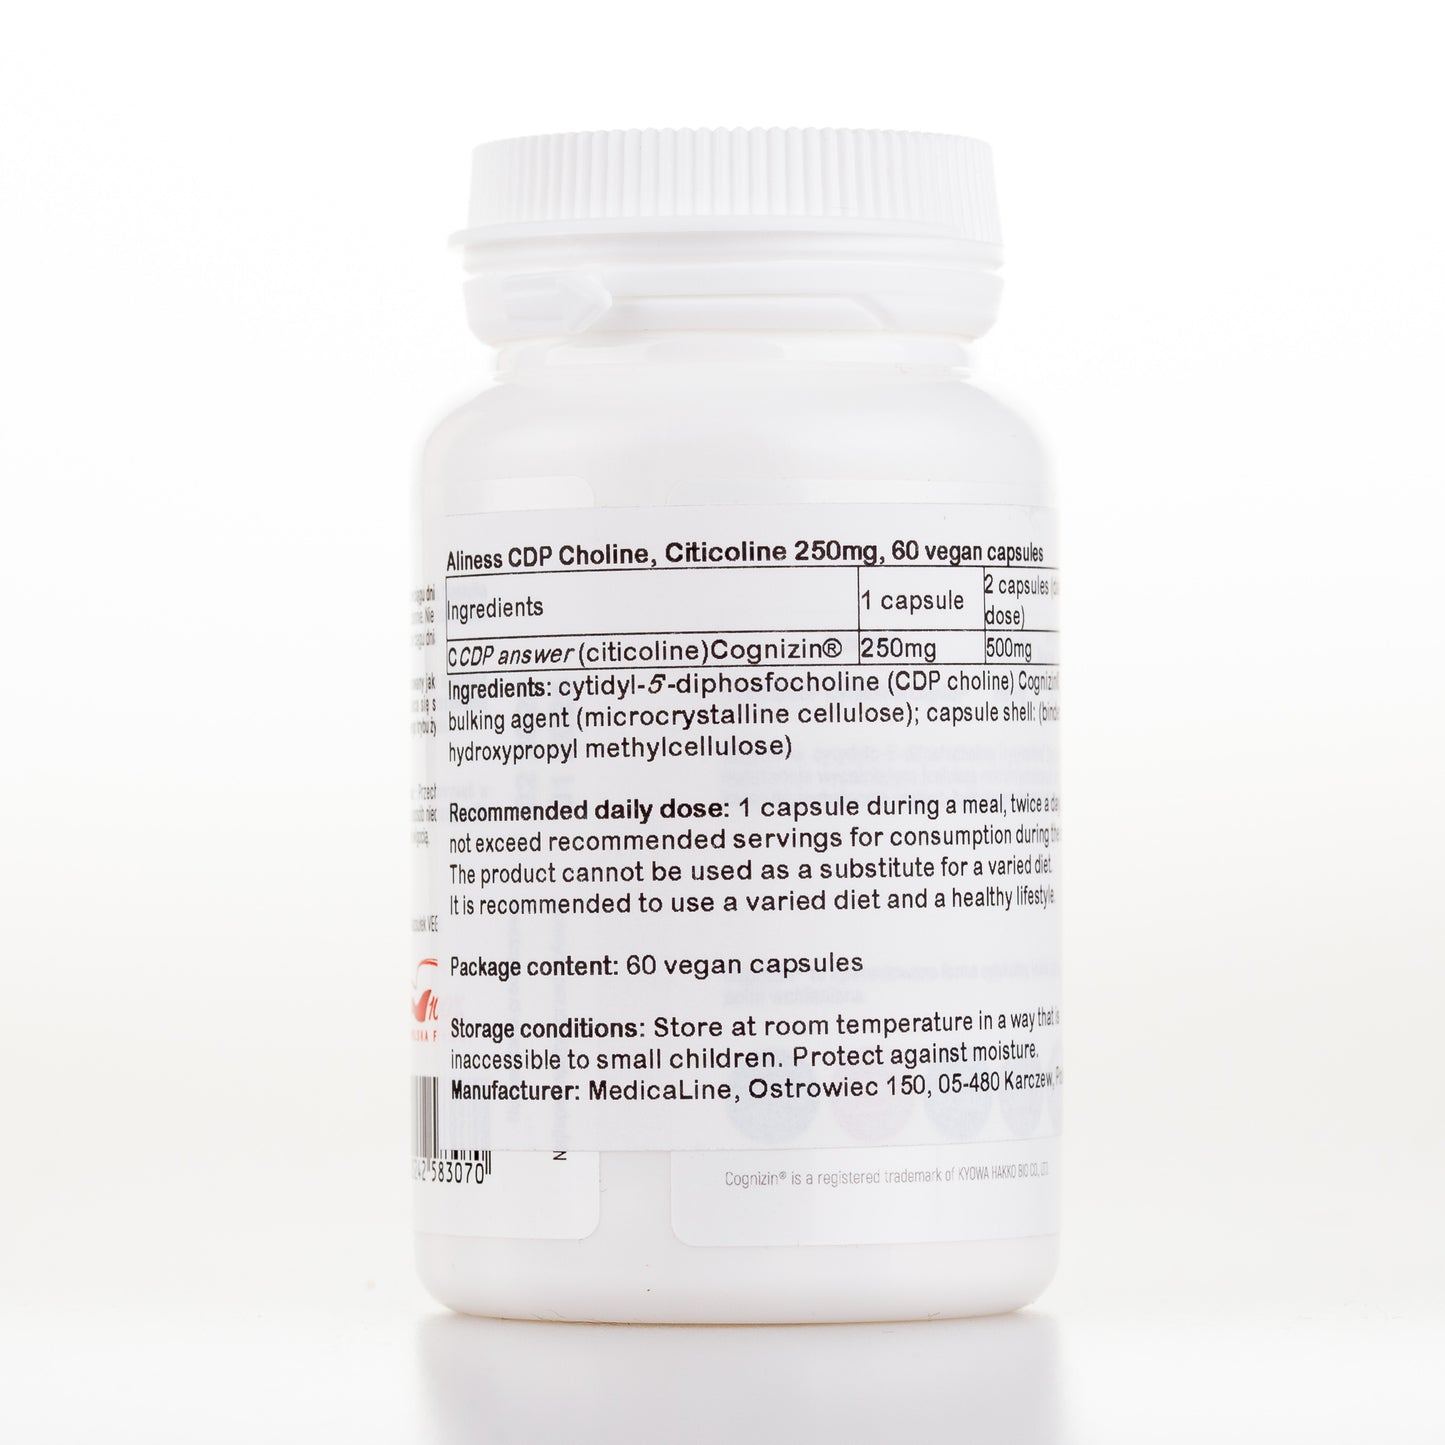 CDP Choline, Citicoline 250mg, 60 vegan capsules, Nootropics | Sharpened Focus & Cognition, Improved Memory & Mood